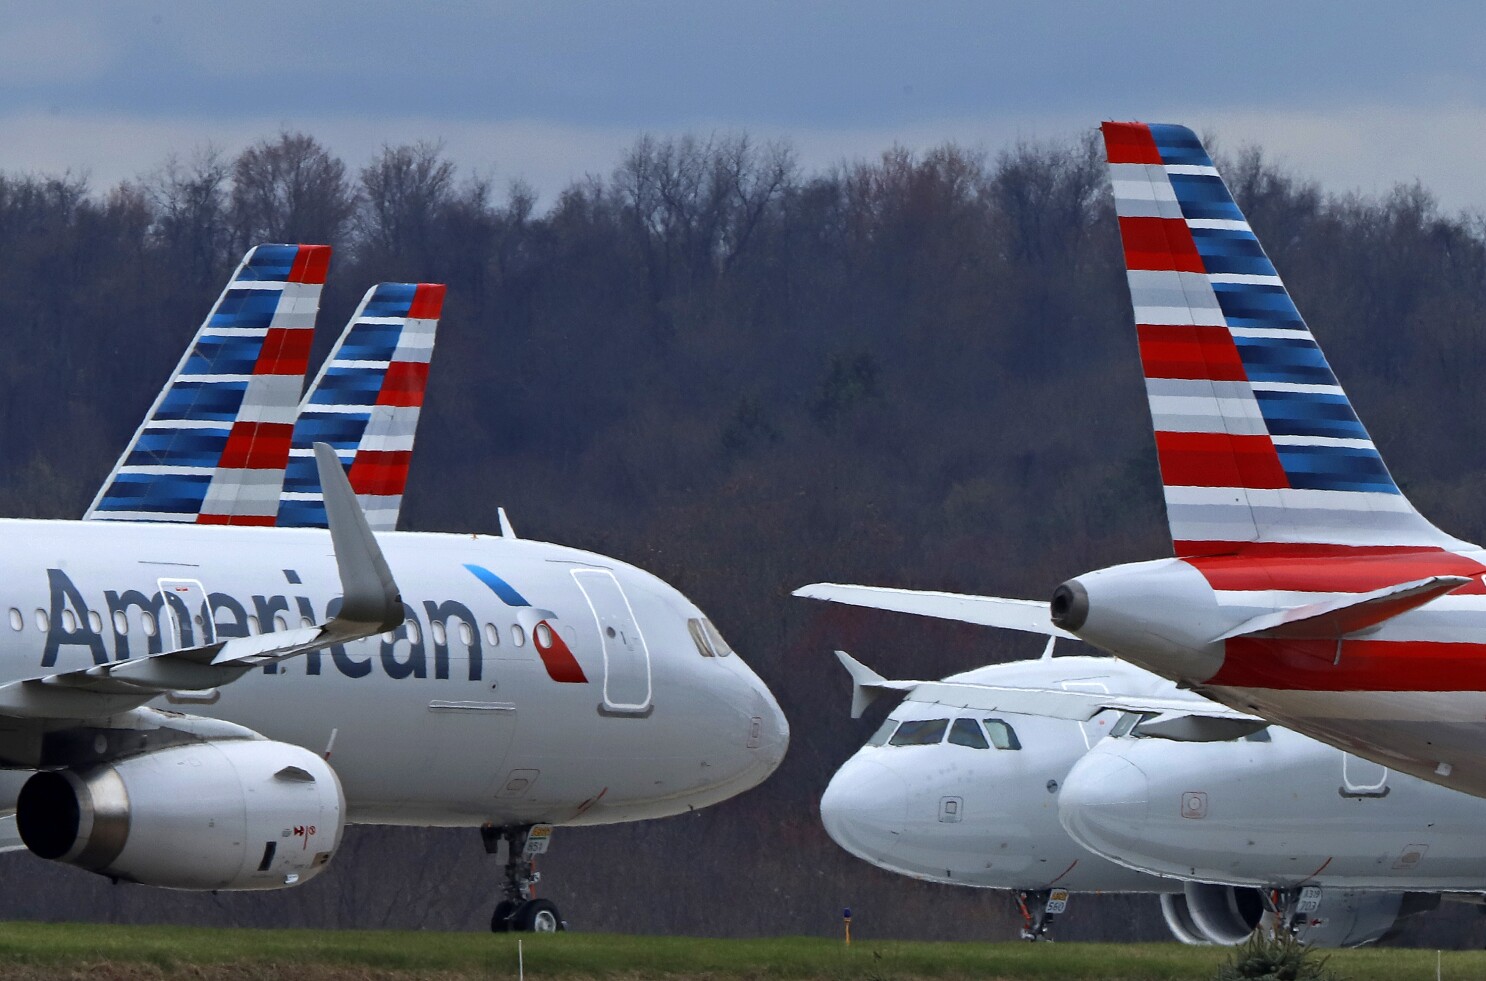 U.S. Airlines Report Second Quarter 2020 Losses